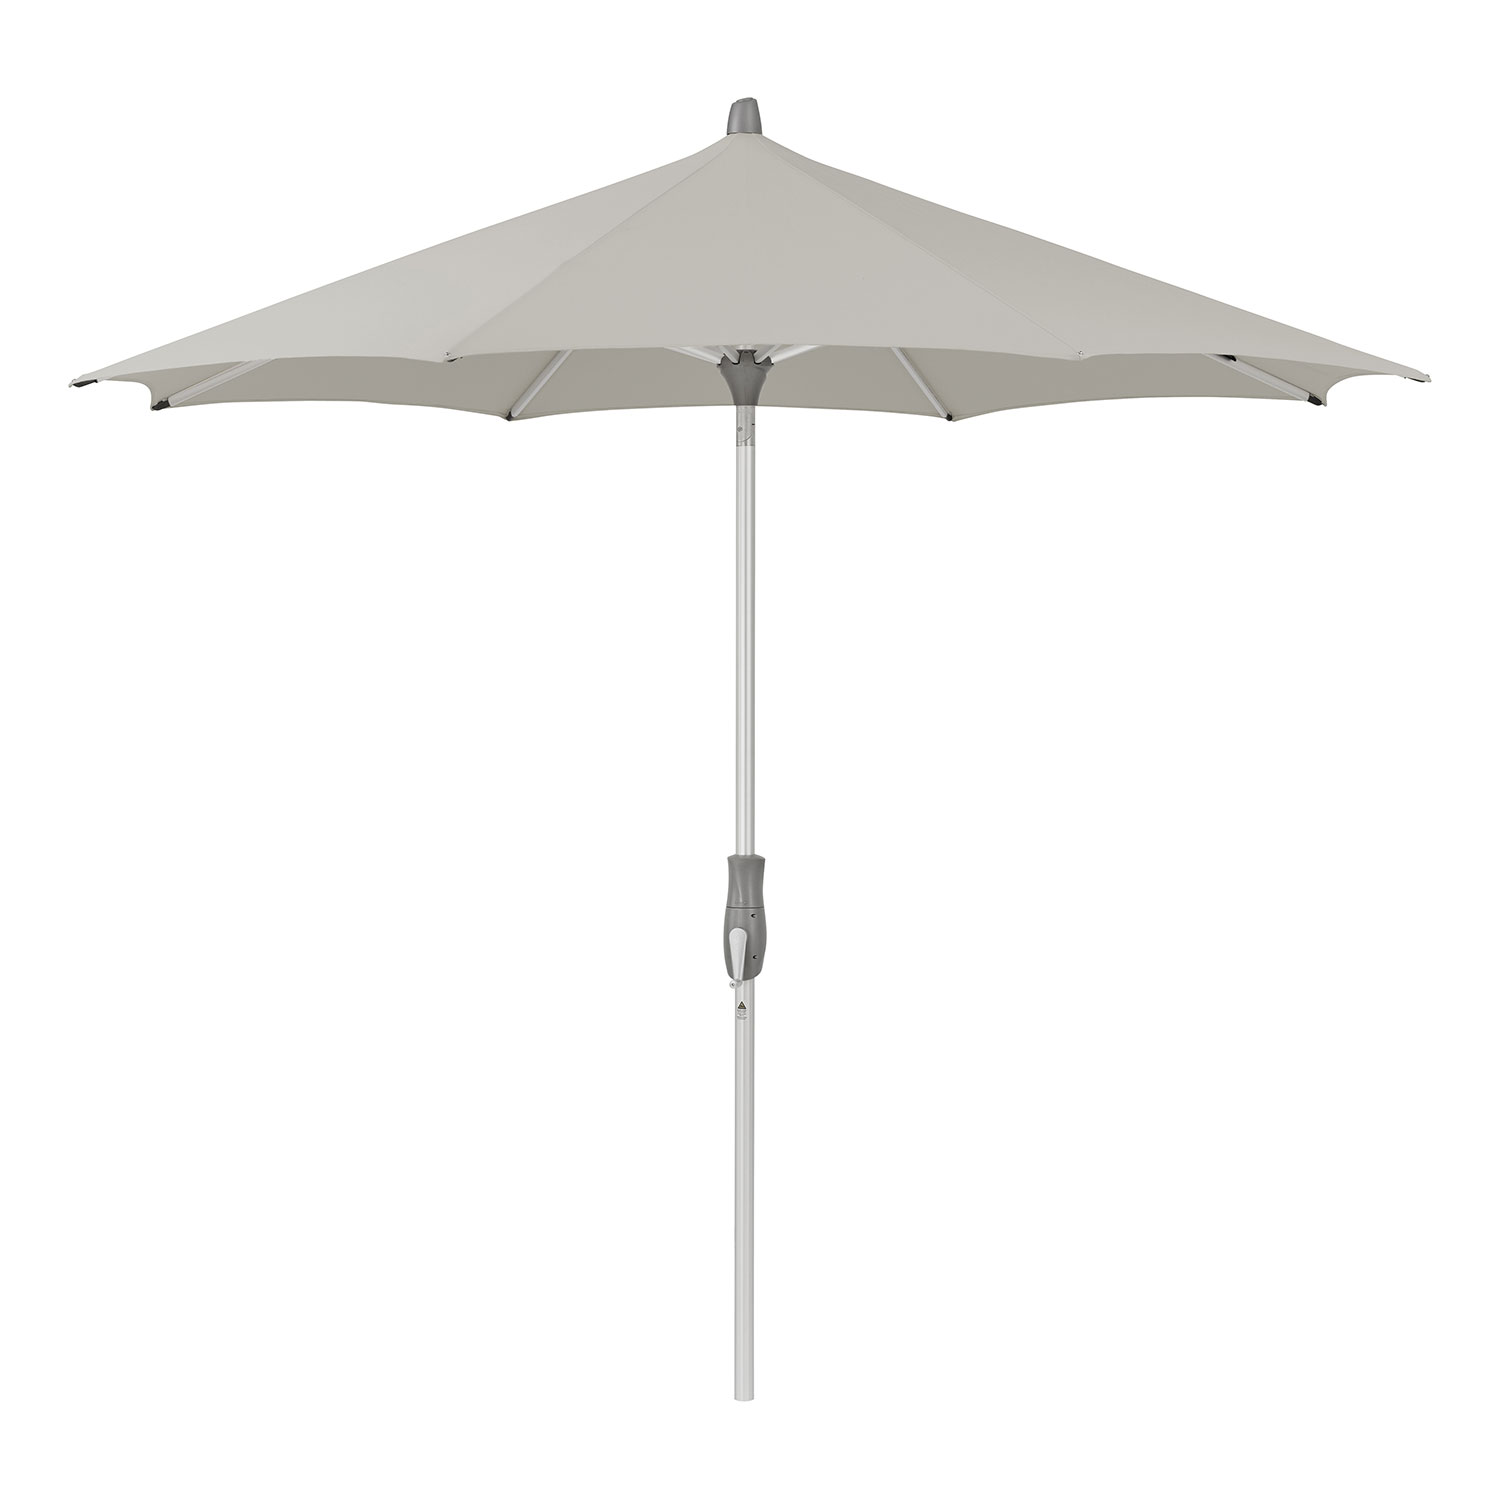 Glatz Alu-twist parasoll 330 cm #151 ash